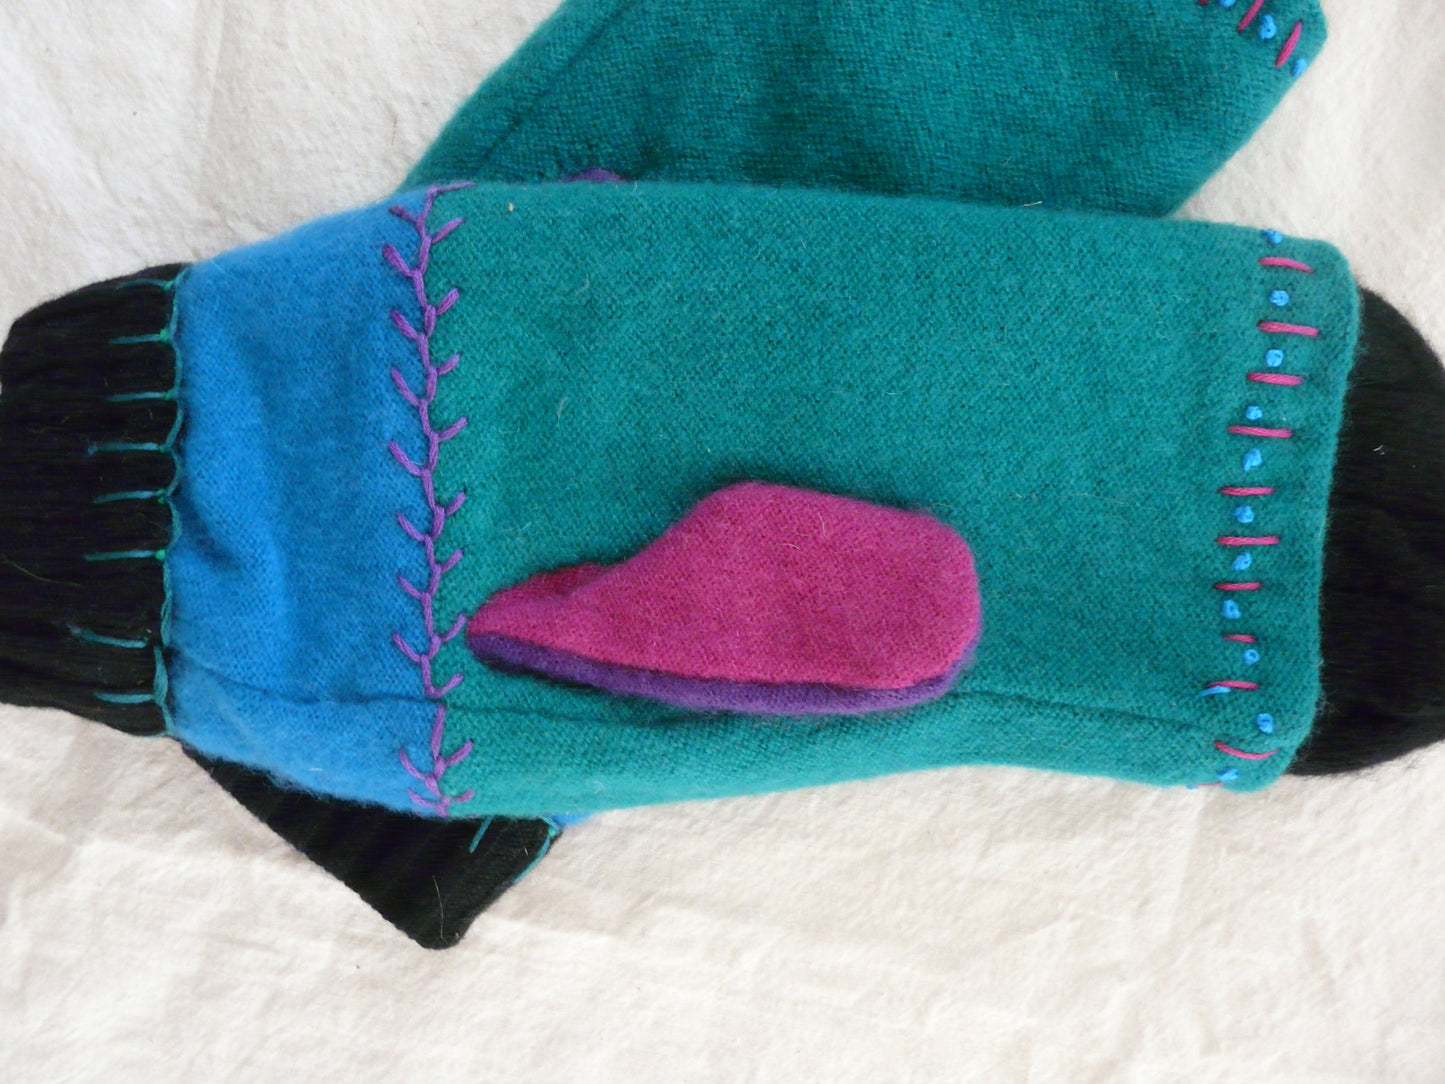 Single cashmere mittens - aqua, pink, and purple